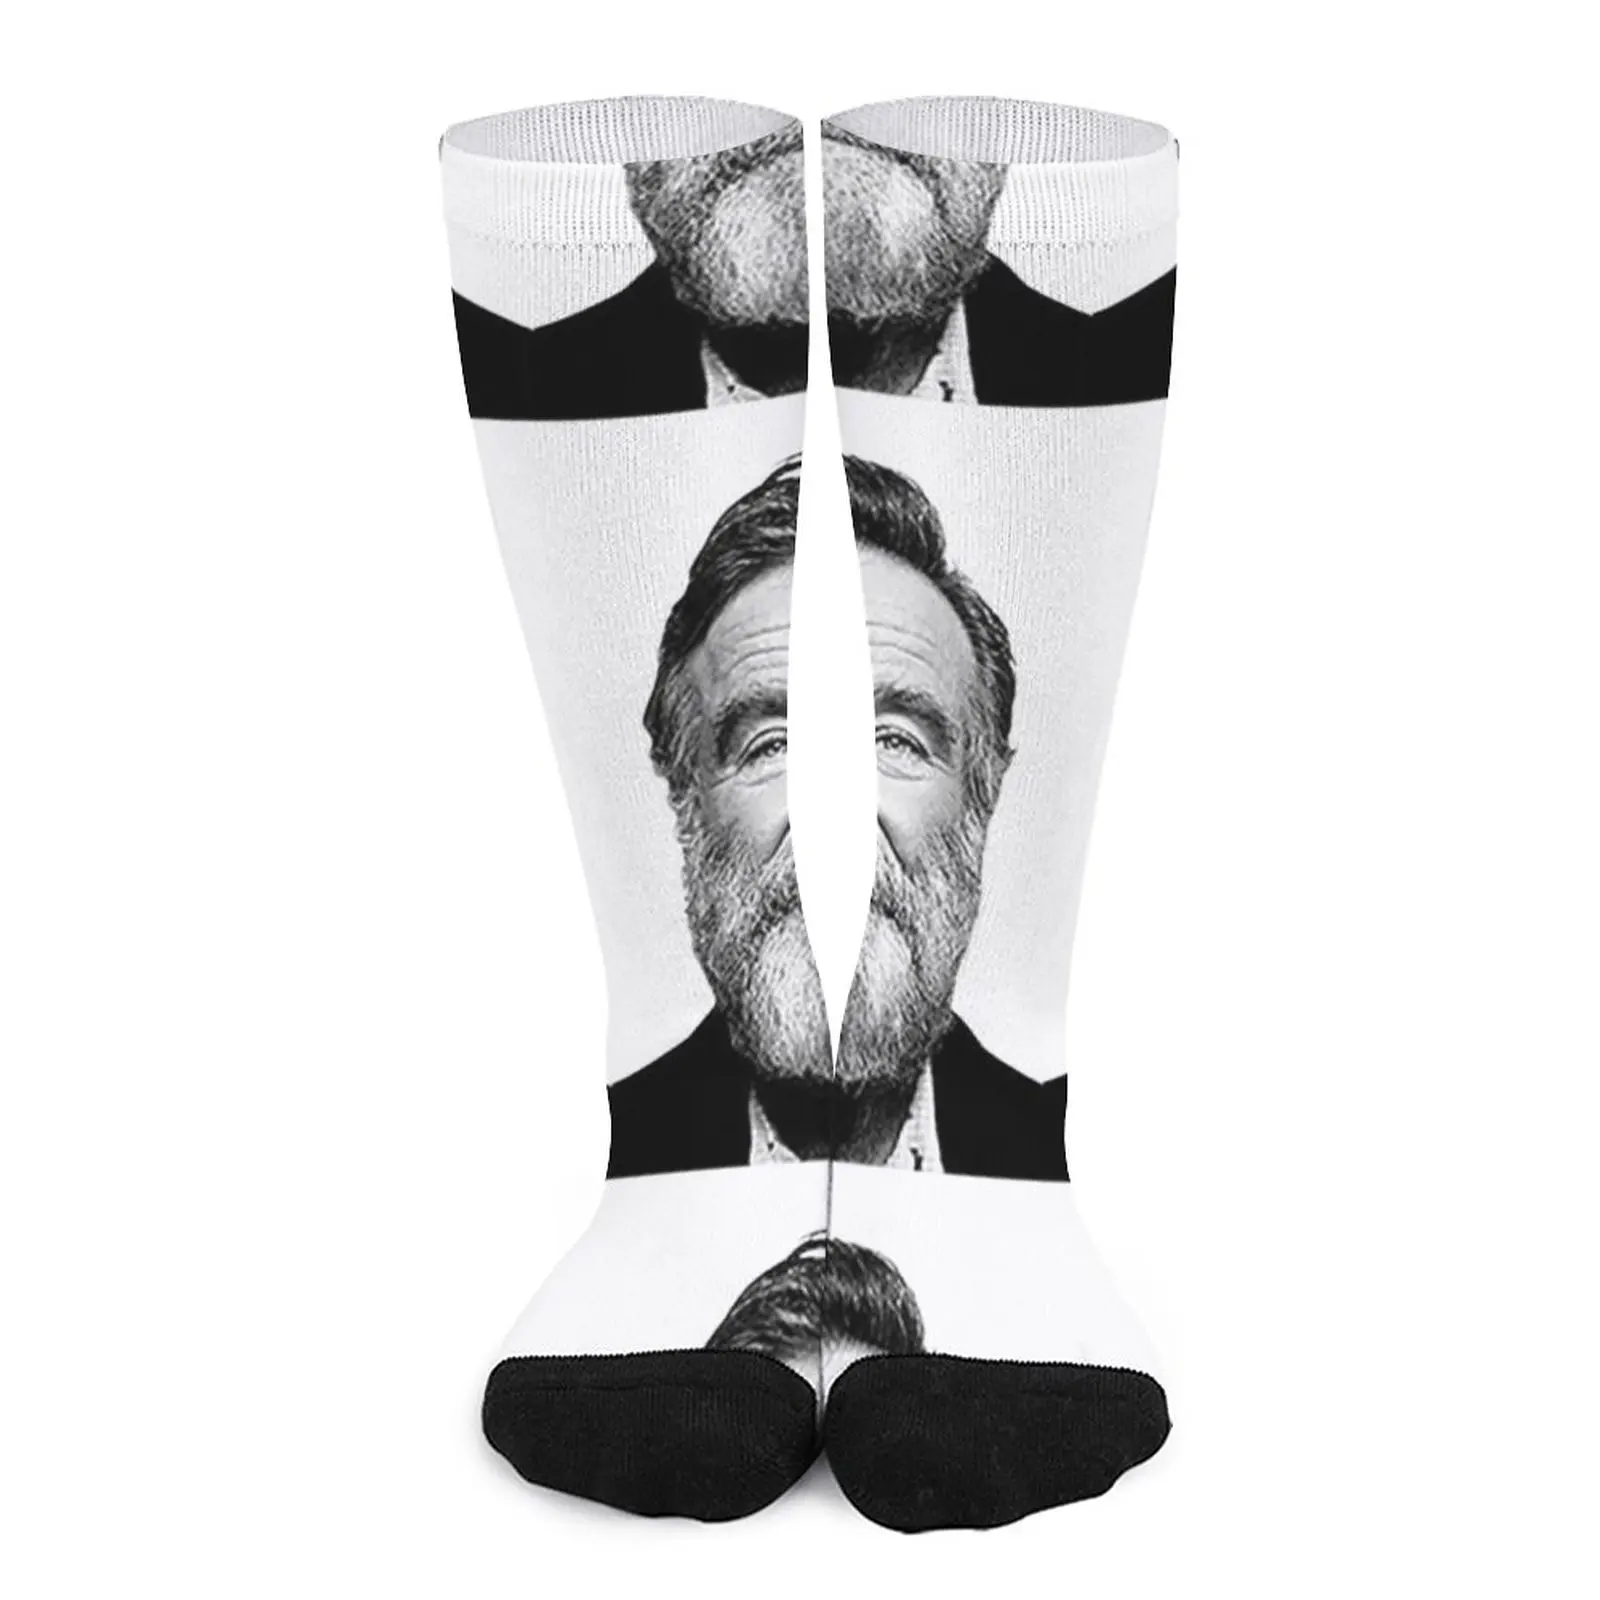 Robin Williams Socks Men's winter socks men socks winter socks men Stockings compression drakarys 22 dragon myth legend symbol fire power strength wisdom yellow red drawing socks compression stockings